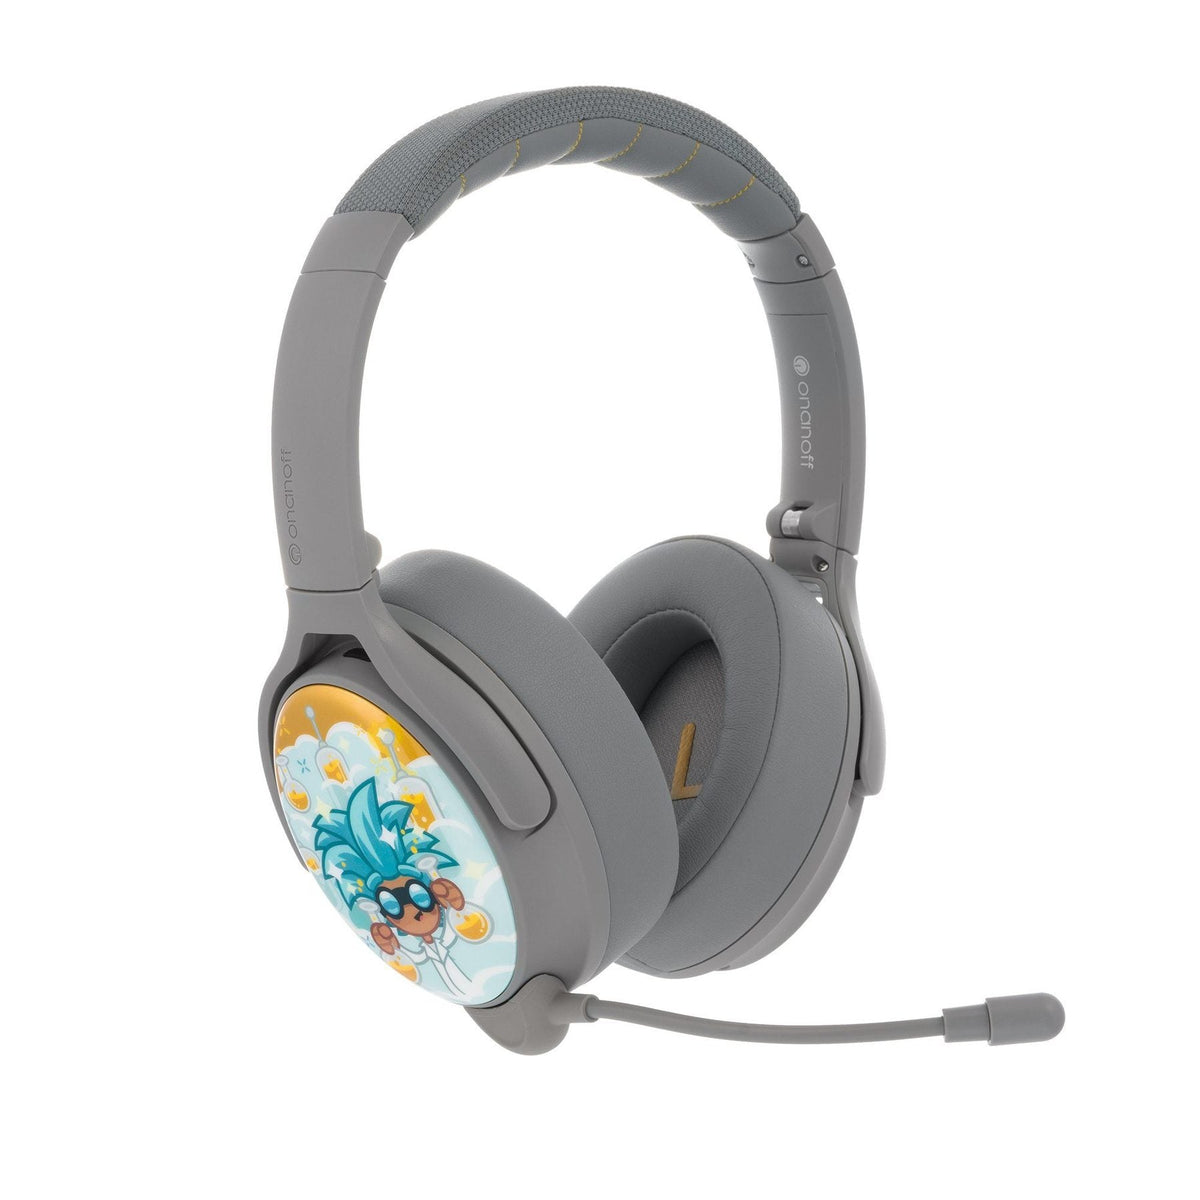 [OPEN BOX] BUDDYPHONES Cosmos Plus Active Noise Cancellation Bluetooth Headphones - Gray Matter